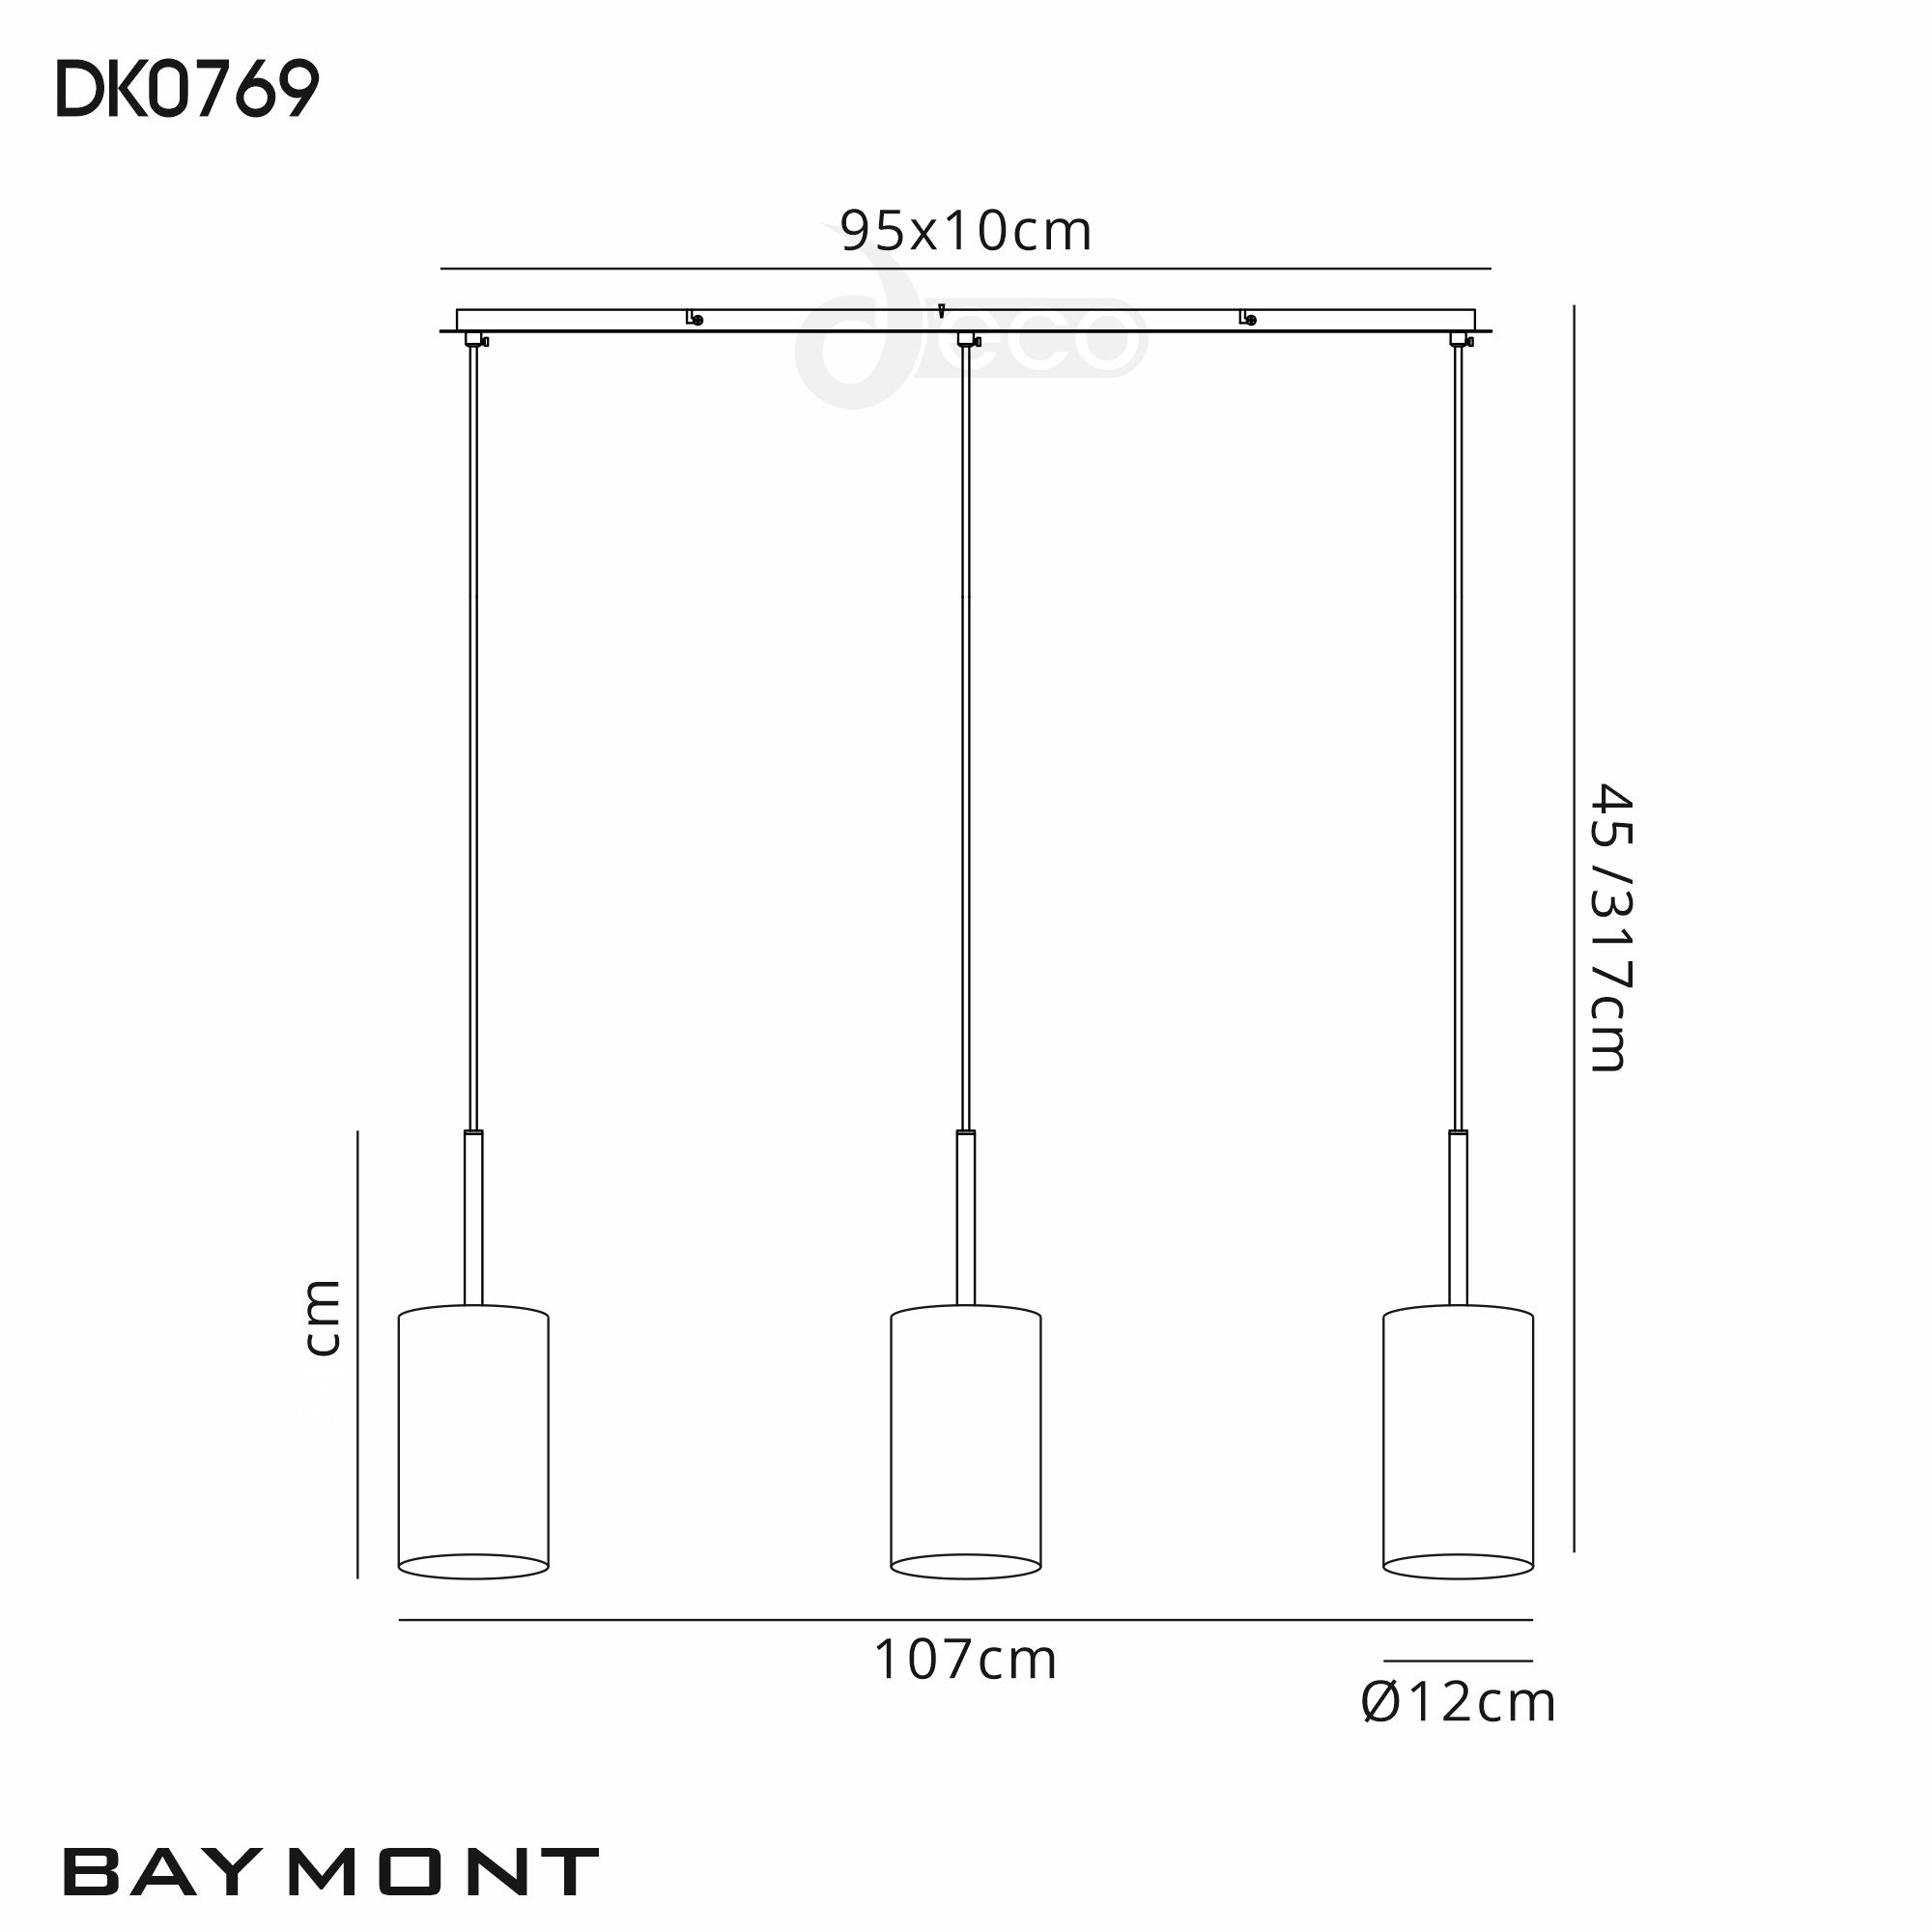 DK0769  Baymont 12cm Shade 3 Light Pendant Polished Chrome; White